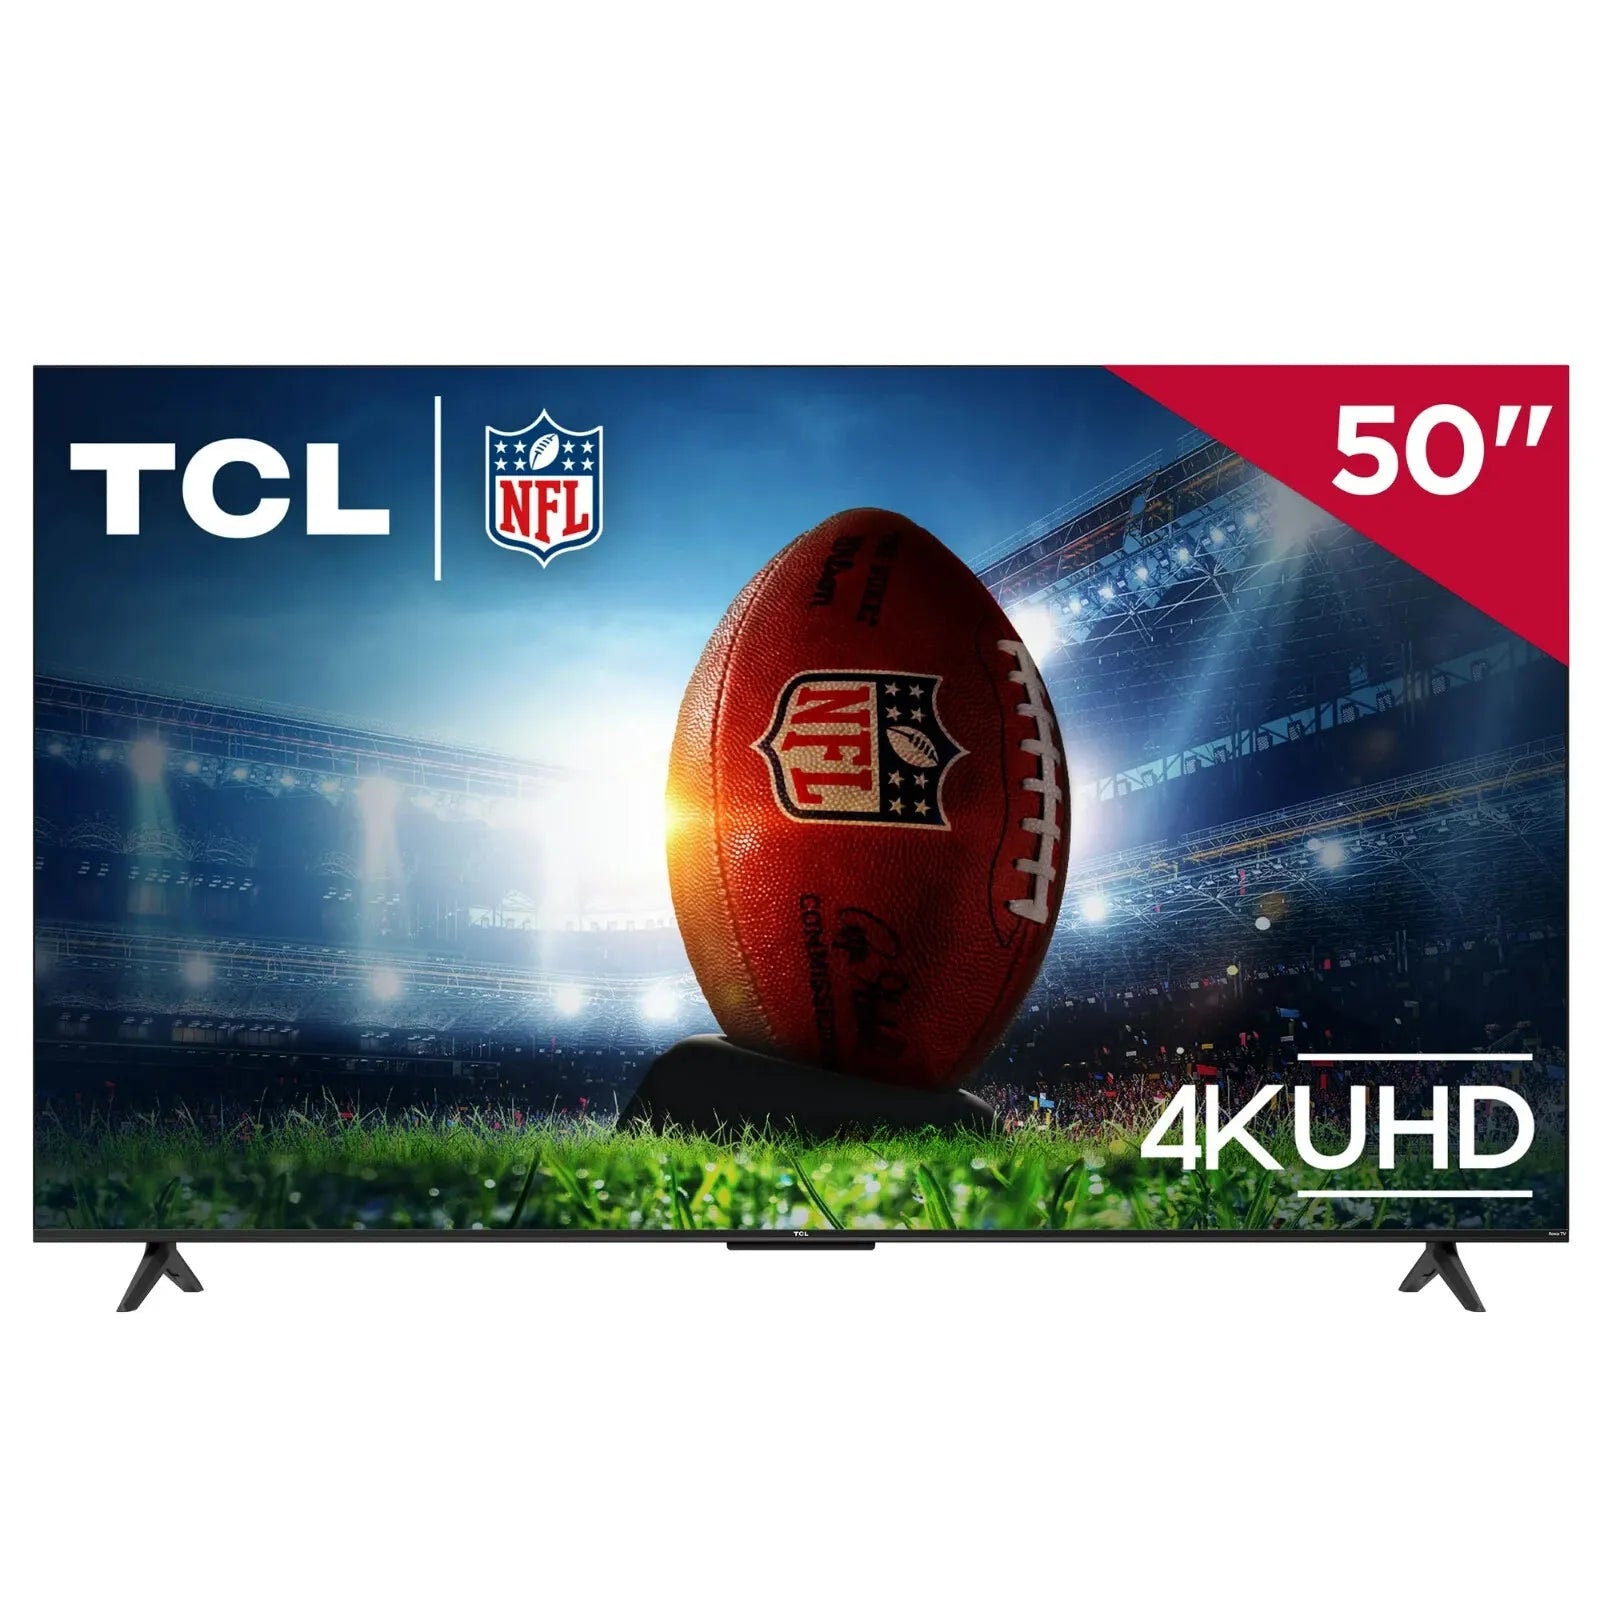 TCL 50" 4K LED Smart Roku TV - (NEW)